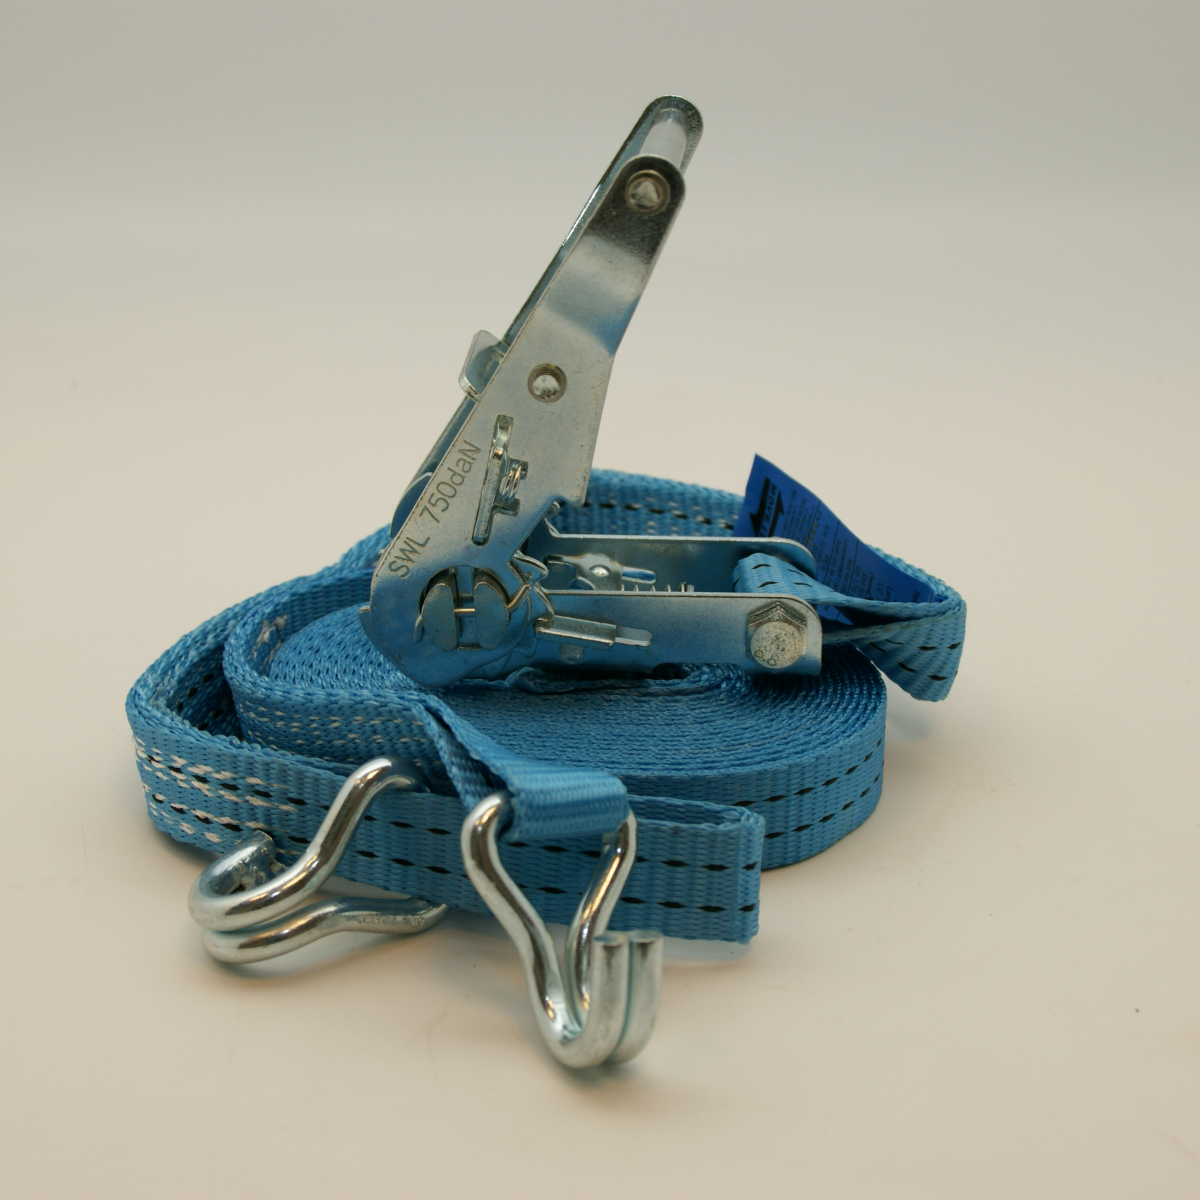 Sjorband: Spanband smalle haak blauw, 25mm 750daN 6m